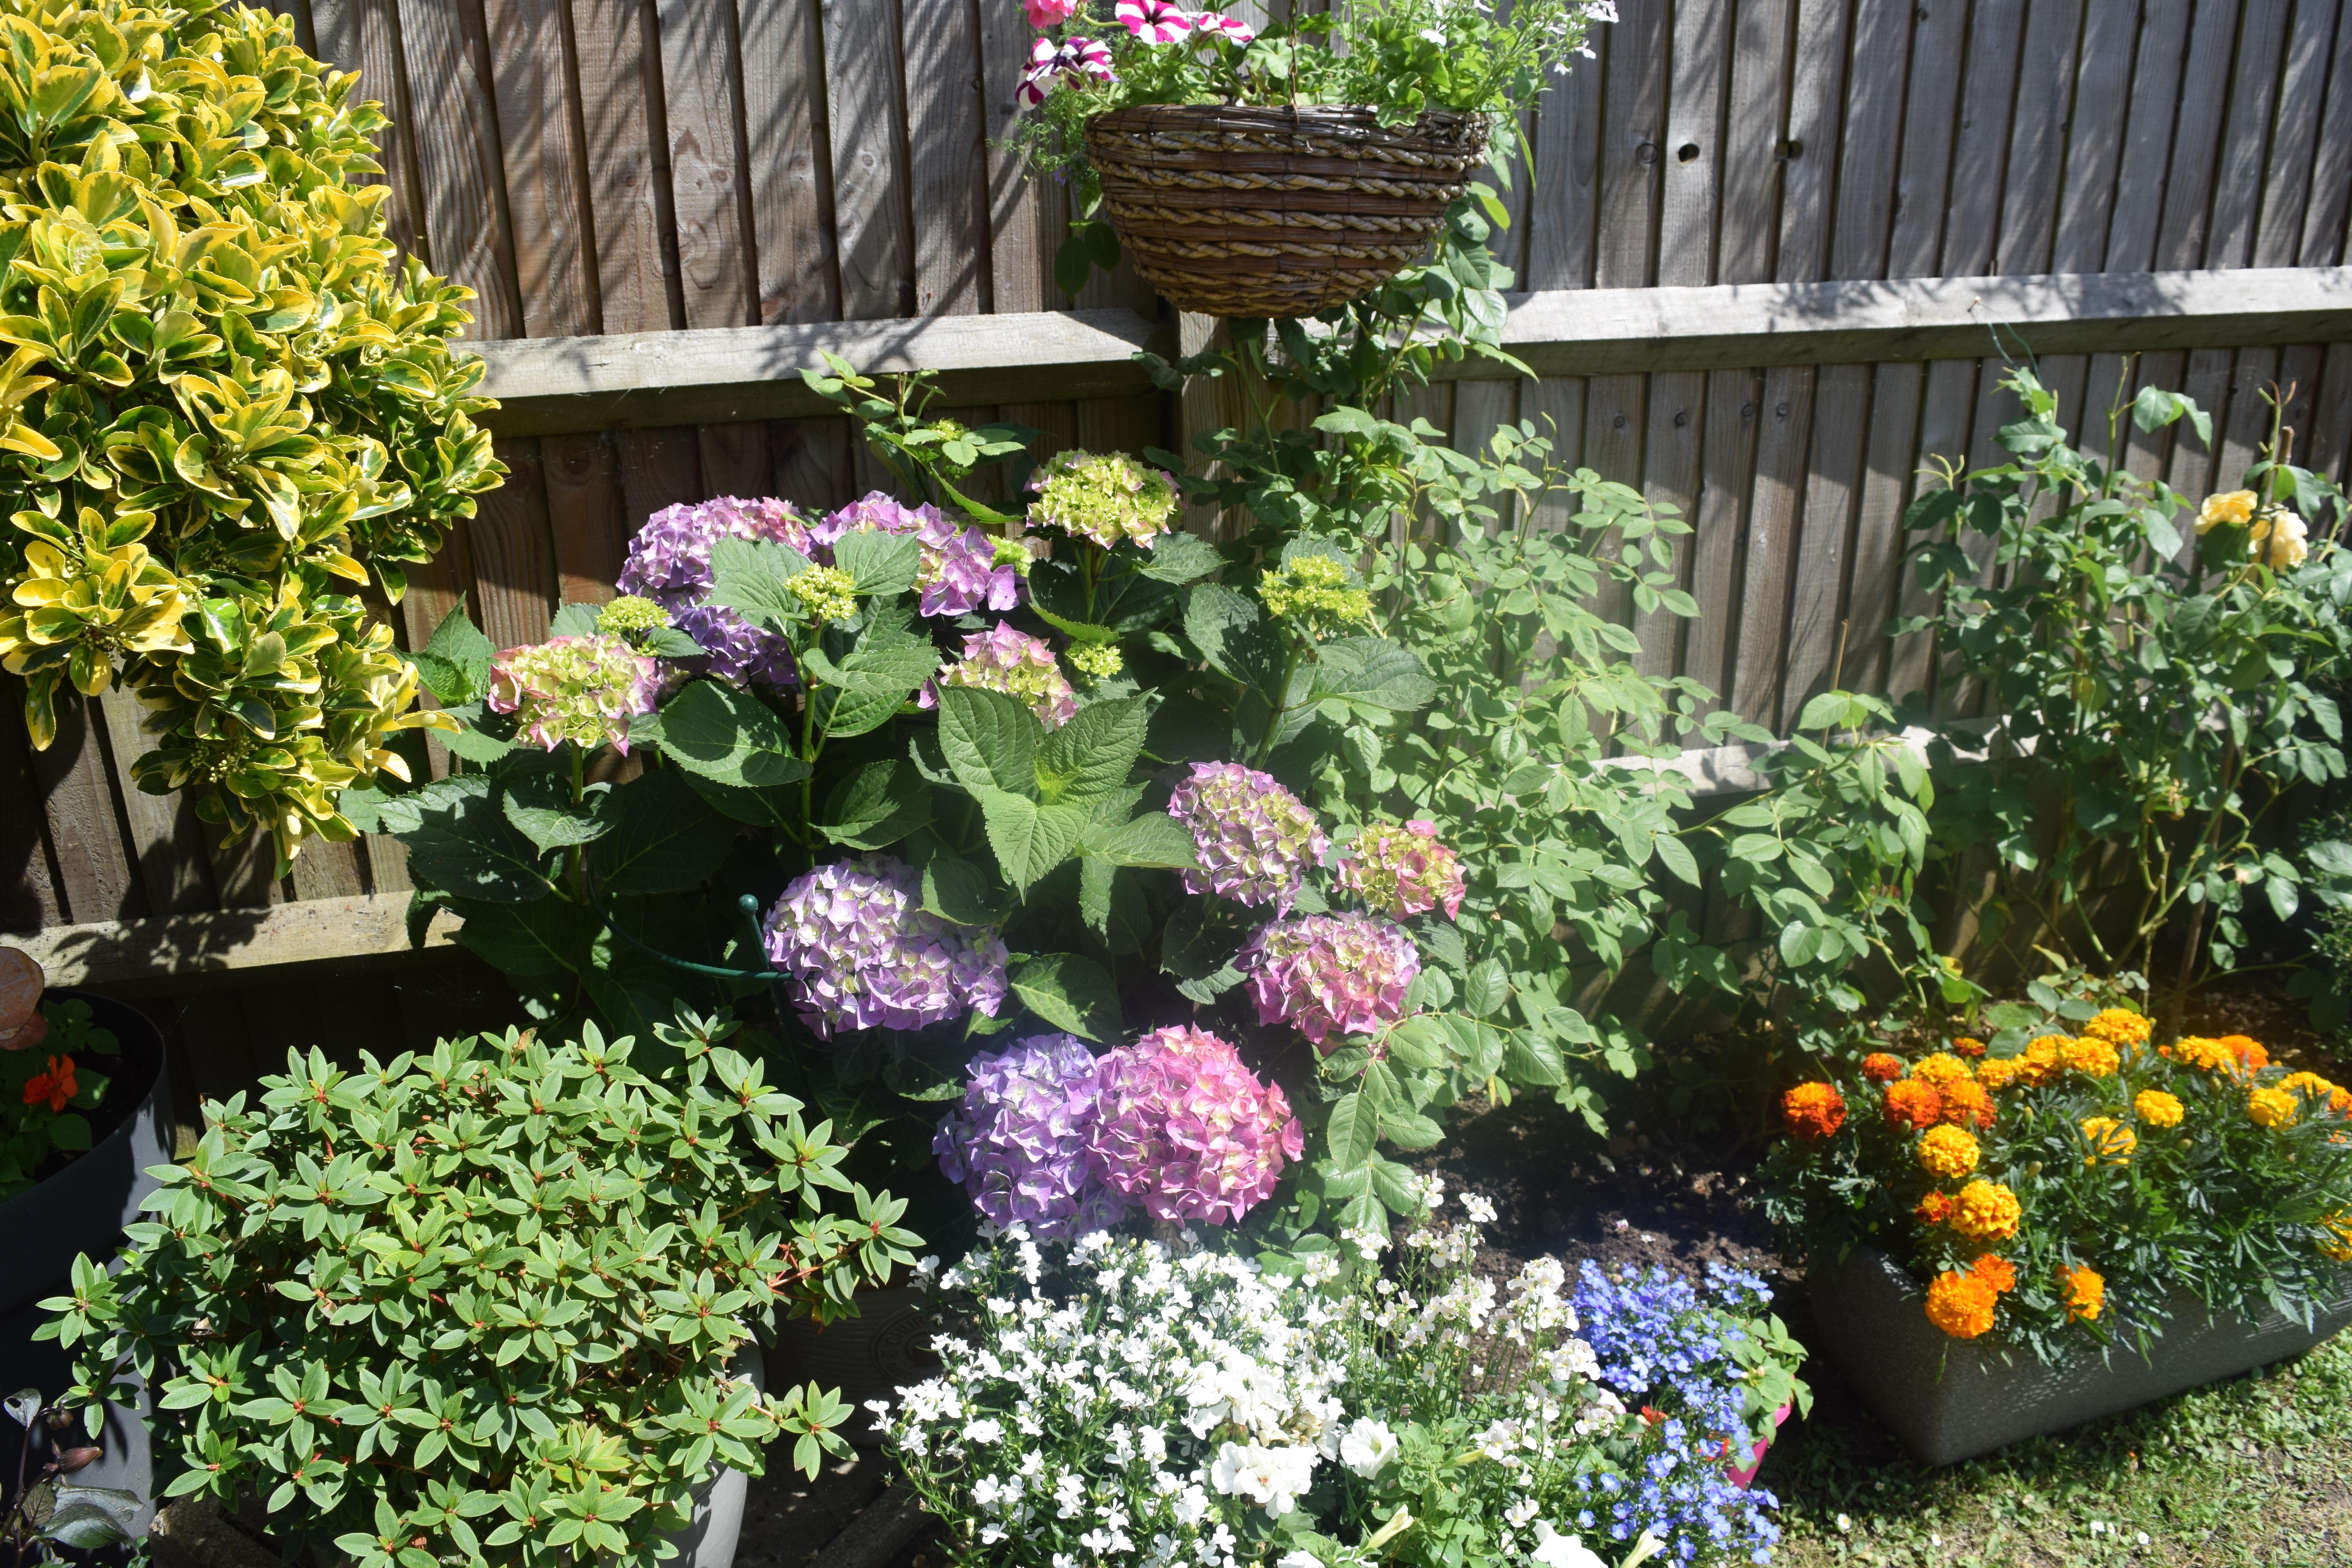 A floral border against a garden fence